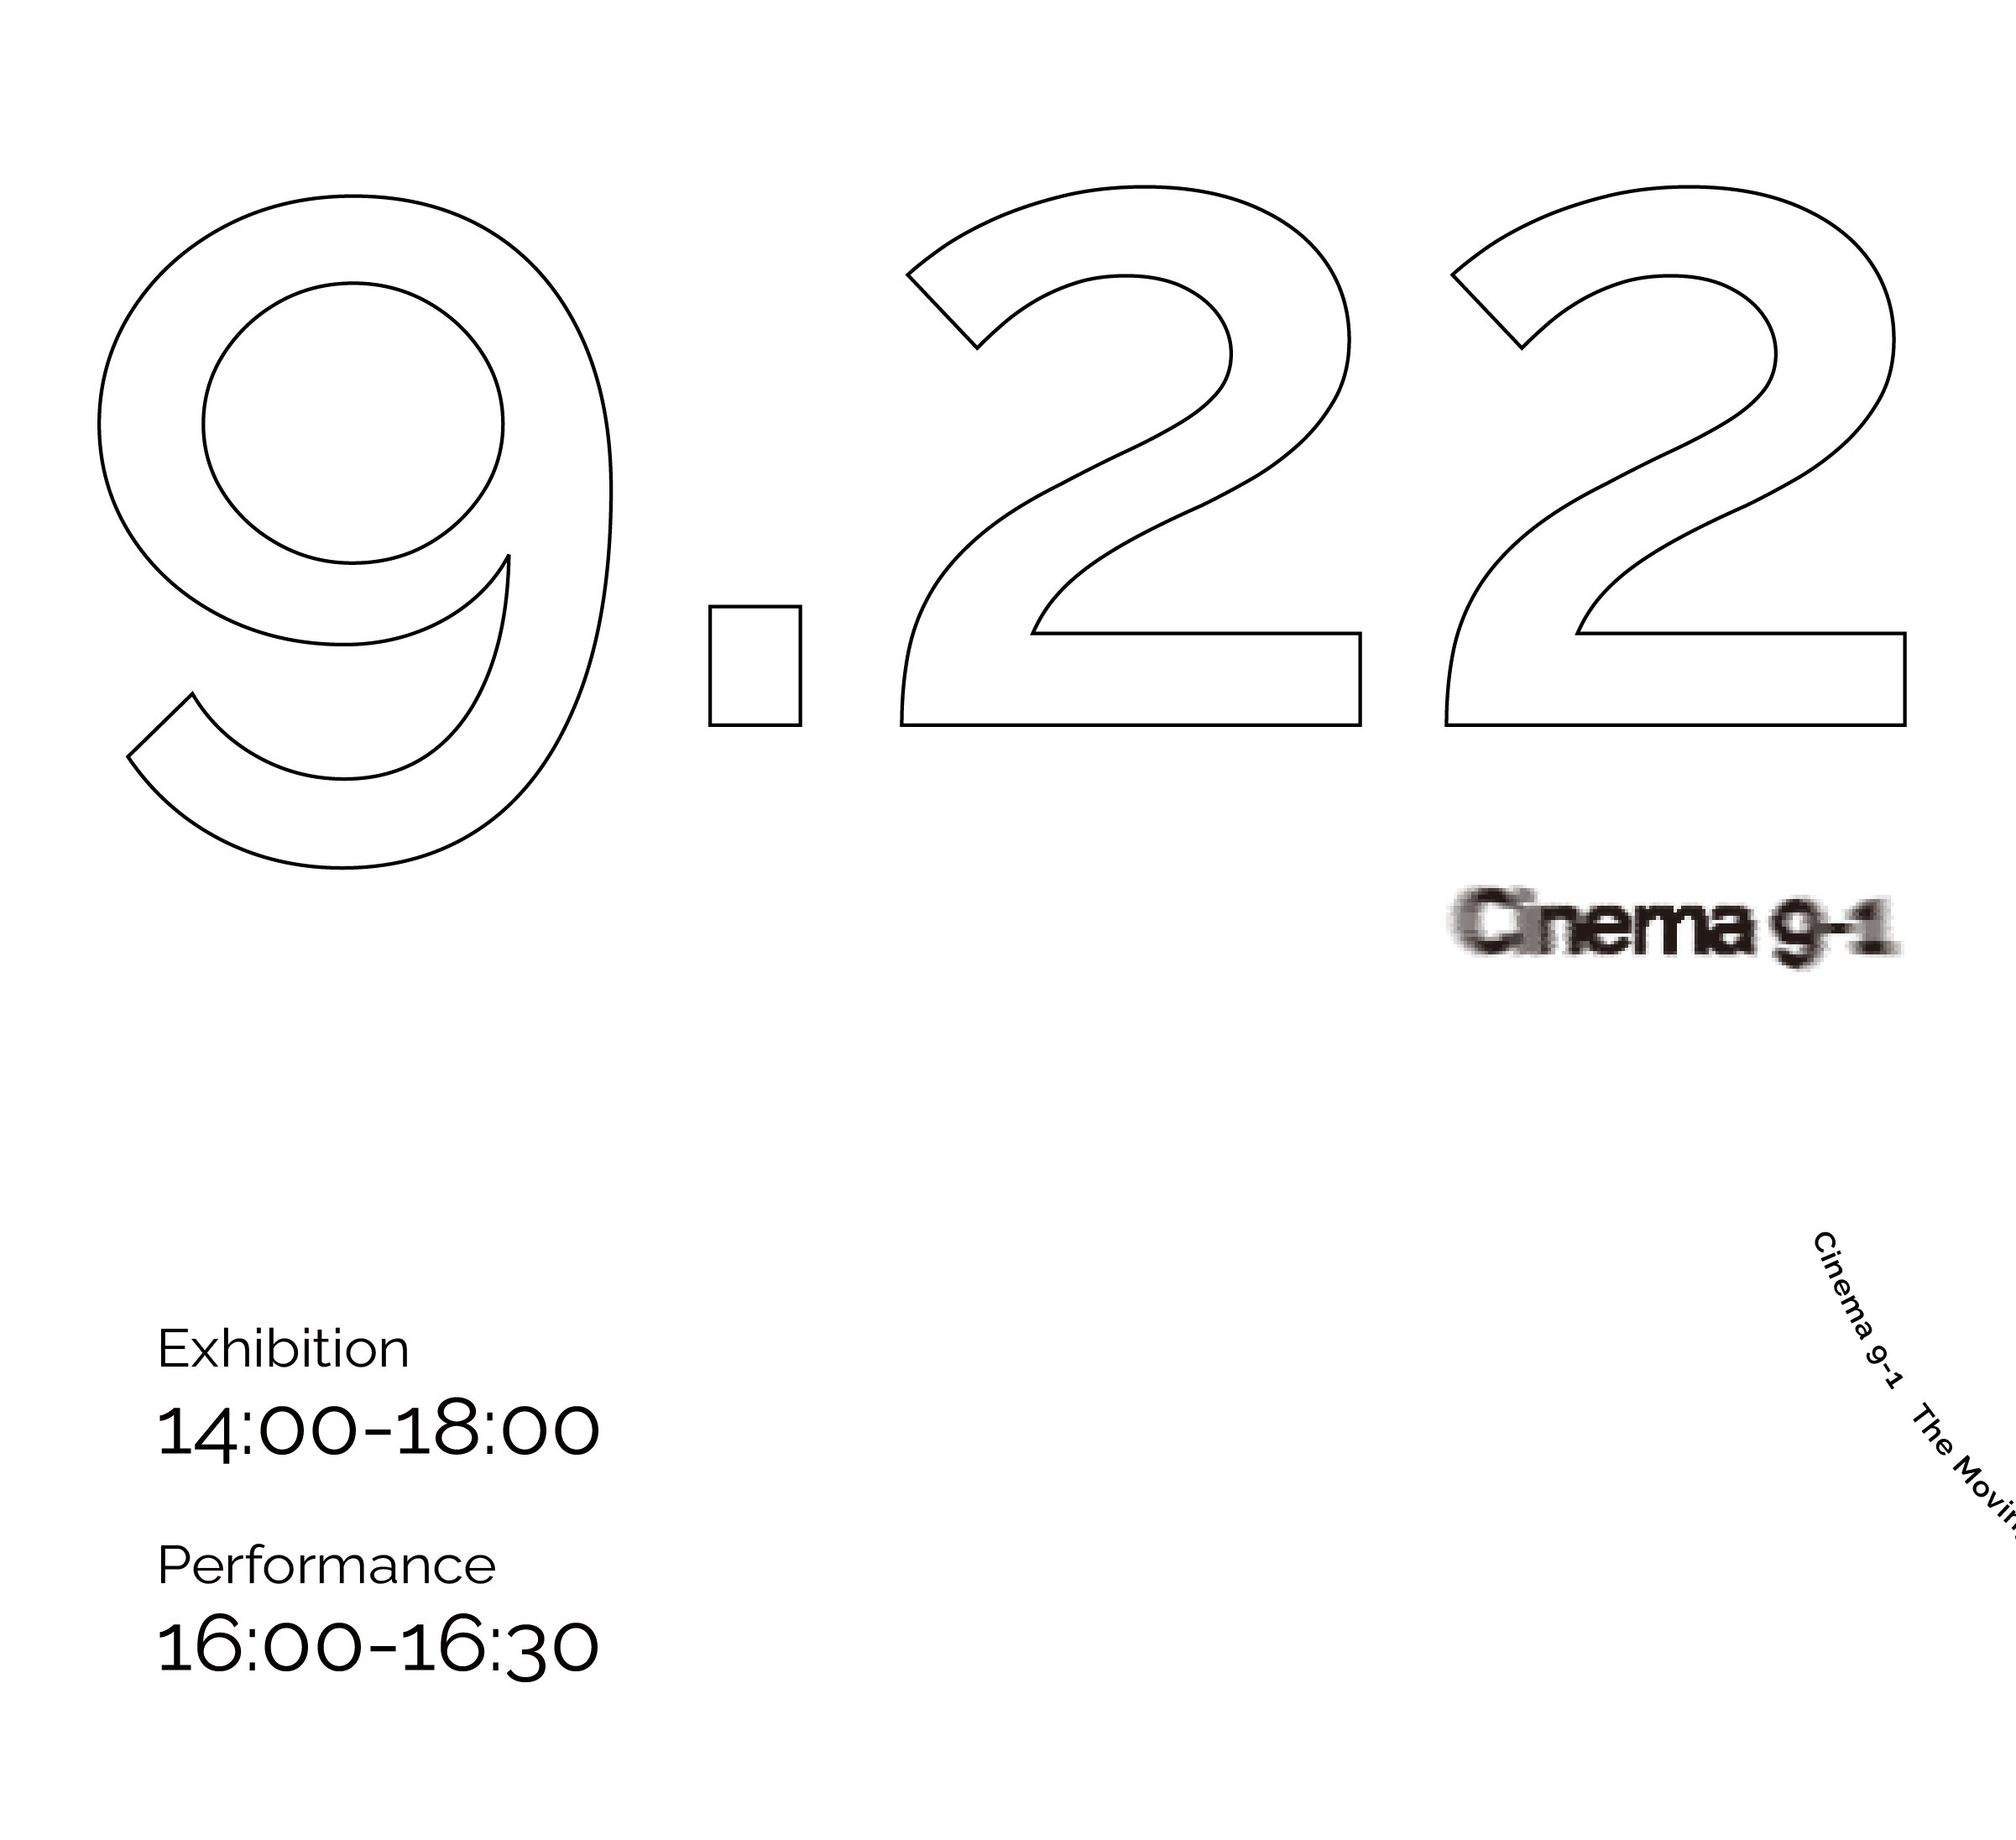 Exhibition 'Cinema 9-1' poster, DAY 1.